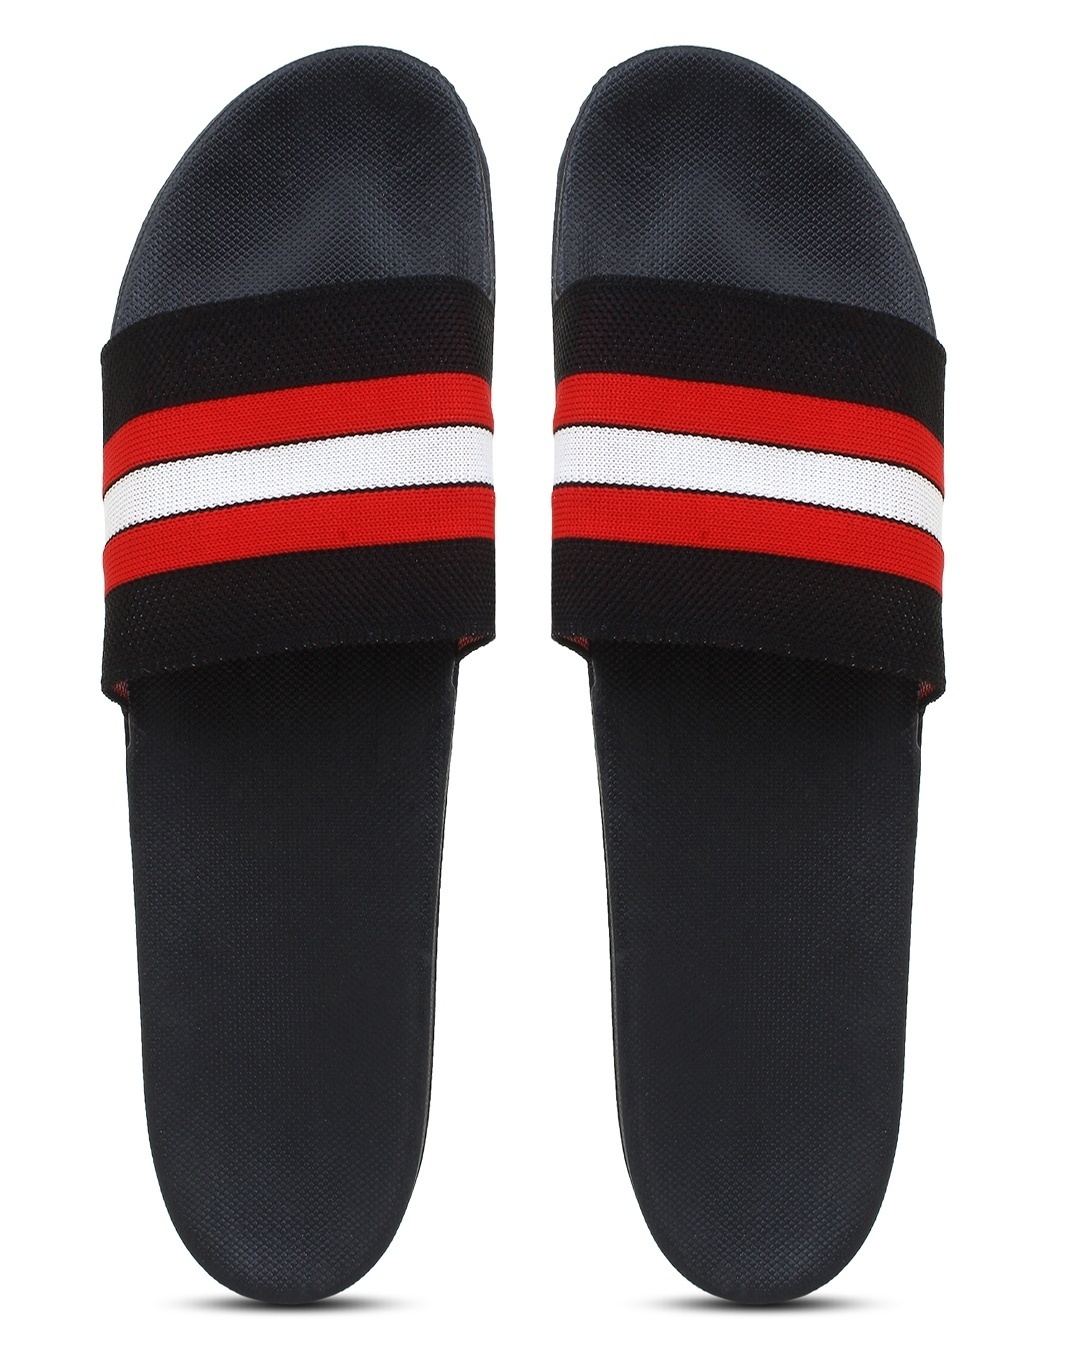 Buy Men's Black & Red Striped Lightweight Sliders Online in India at ...